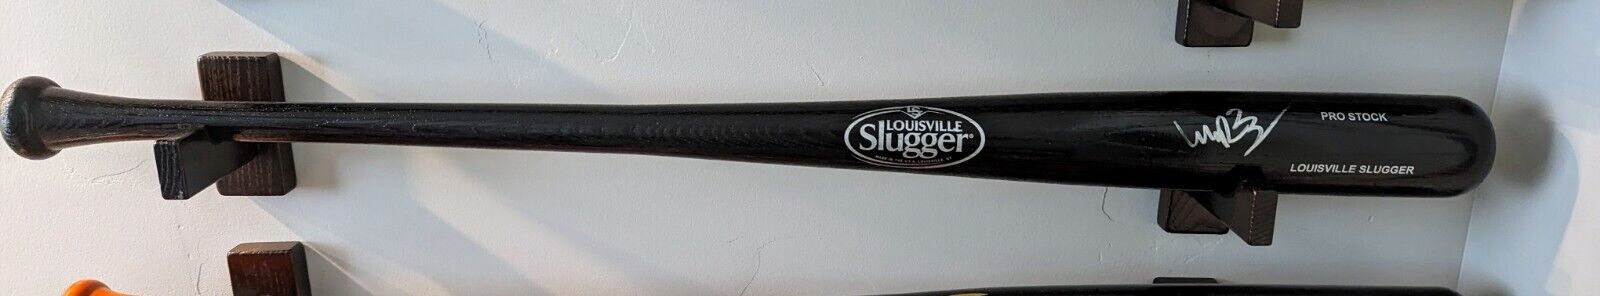 Manny Ramirez Signed Louisville Slugger Pro Stock Black Baseball Bat - (Beckett)